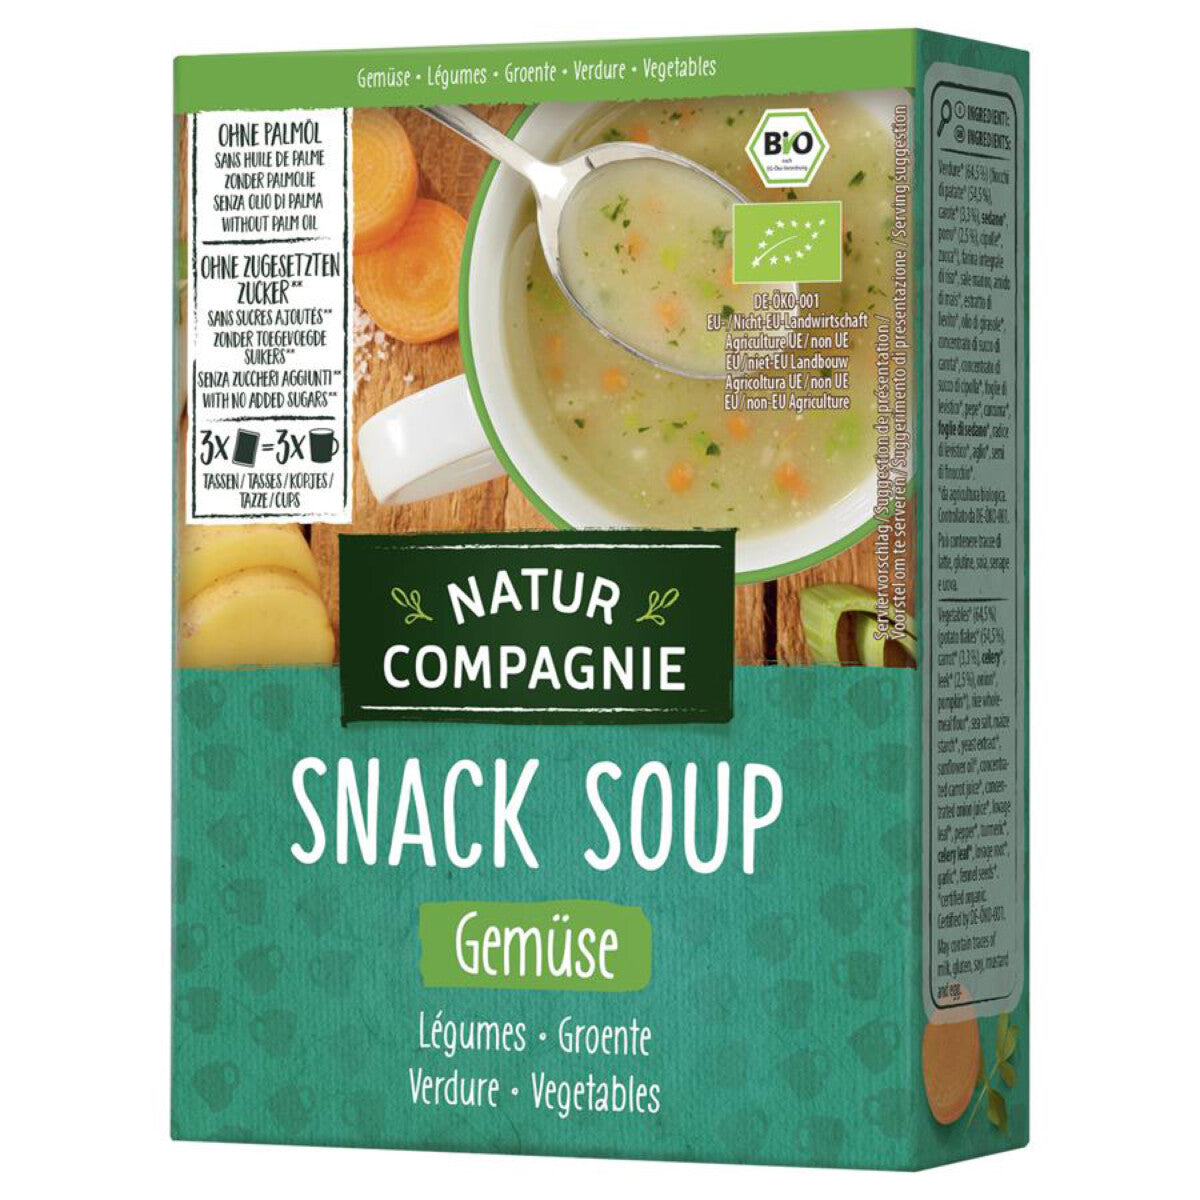 NATUR COMPAGNIE Snack Soup Gemüse - 3x18g (54 g)